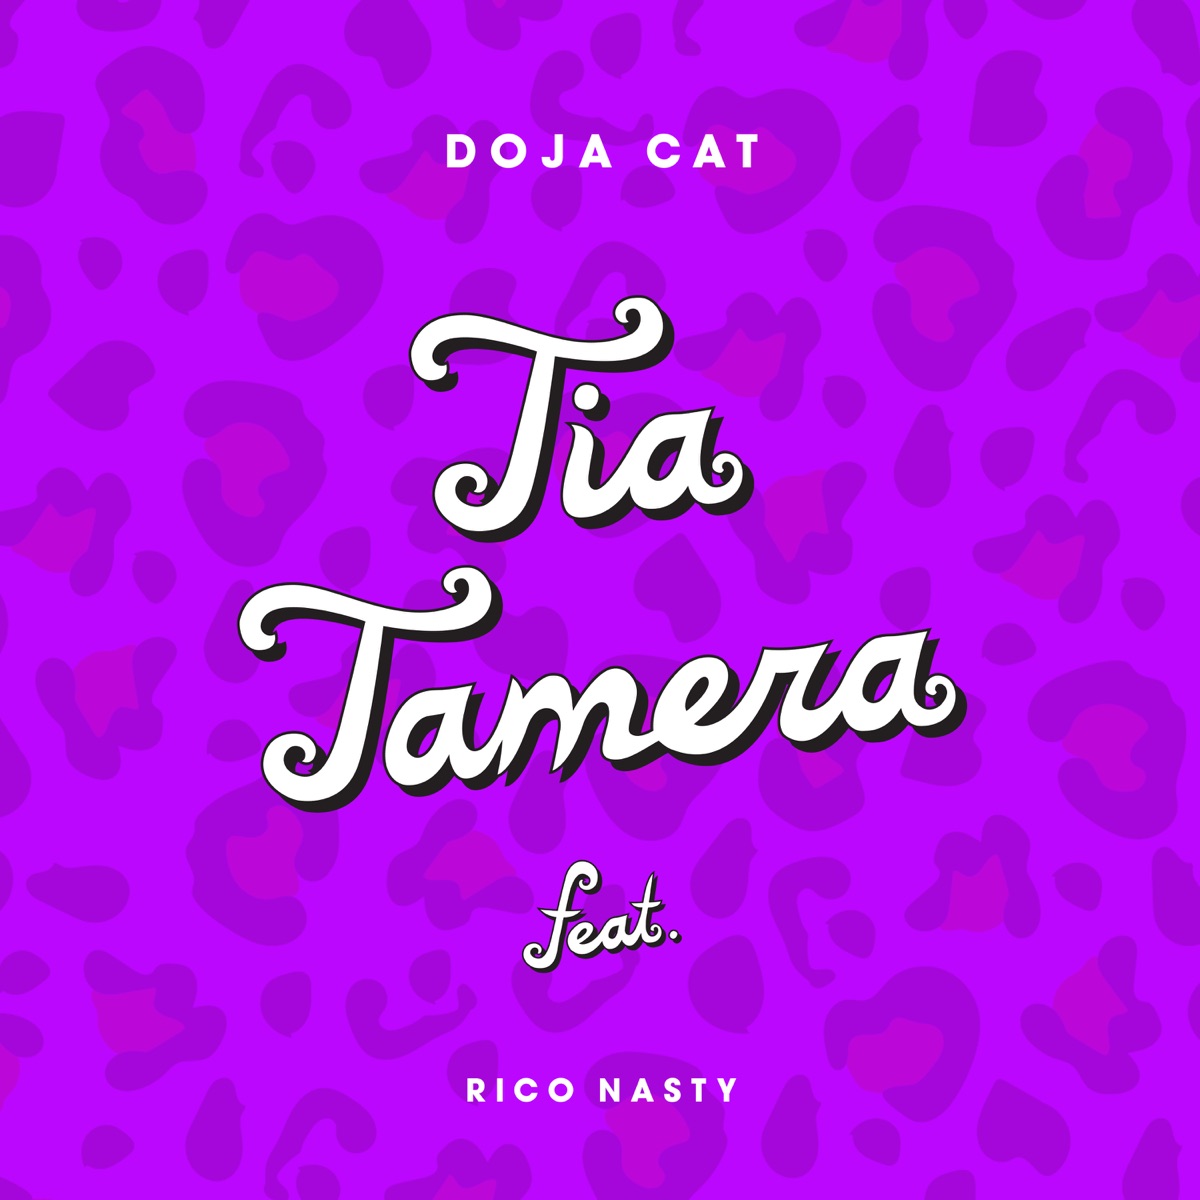 Strawberry earrings of Doja Cat in Doja Cat & Rico Nasty "Tia Tamera